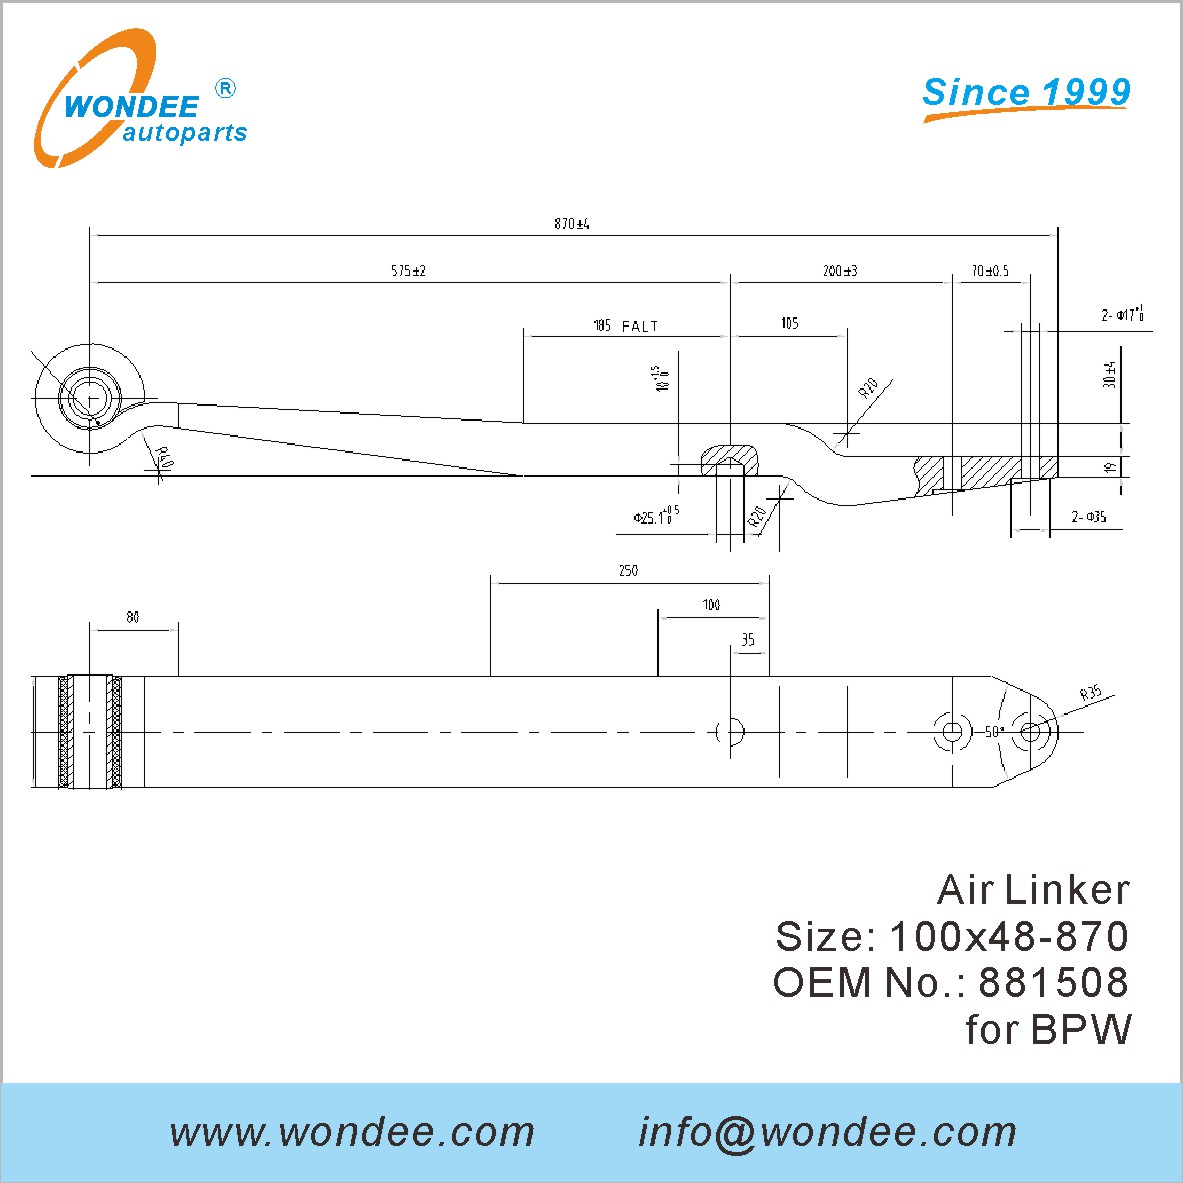 WONDEE Autoparts Air Linker OEM 881508 for BPW